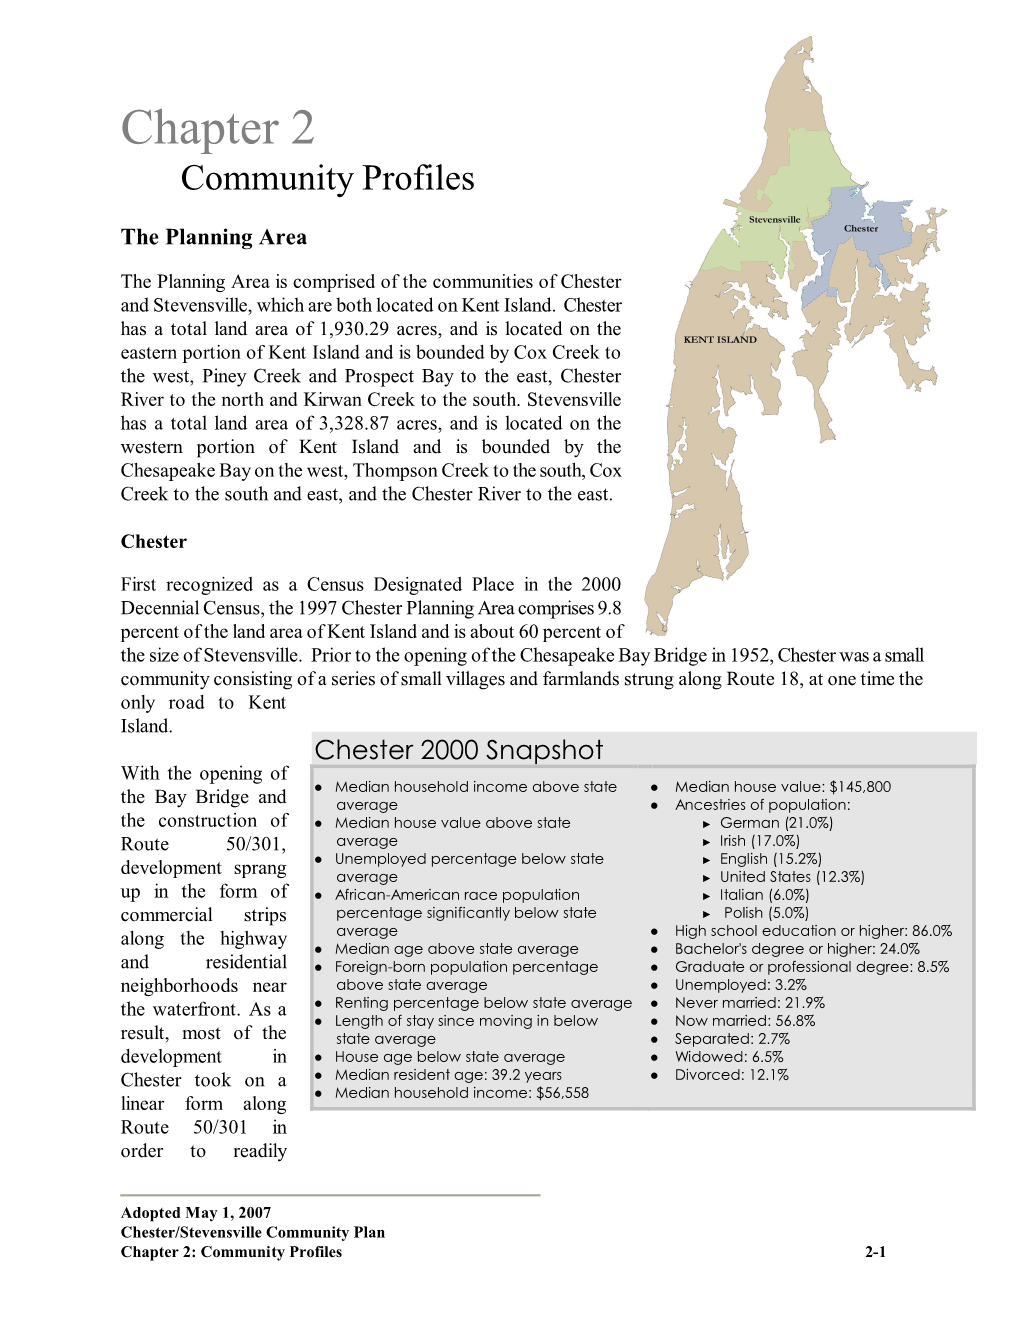 Chapter 2 Community Profiles